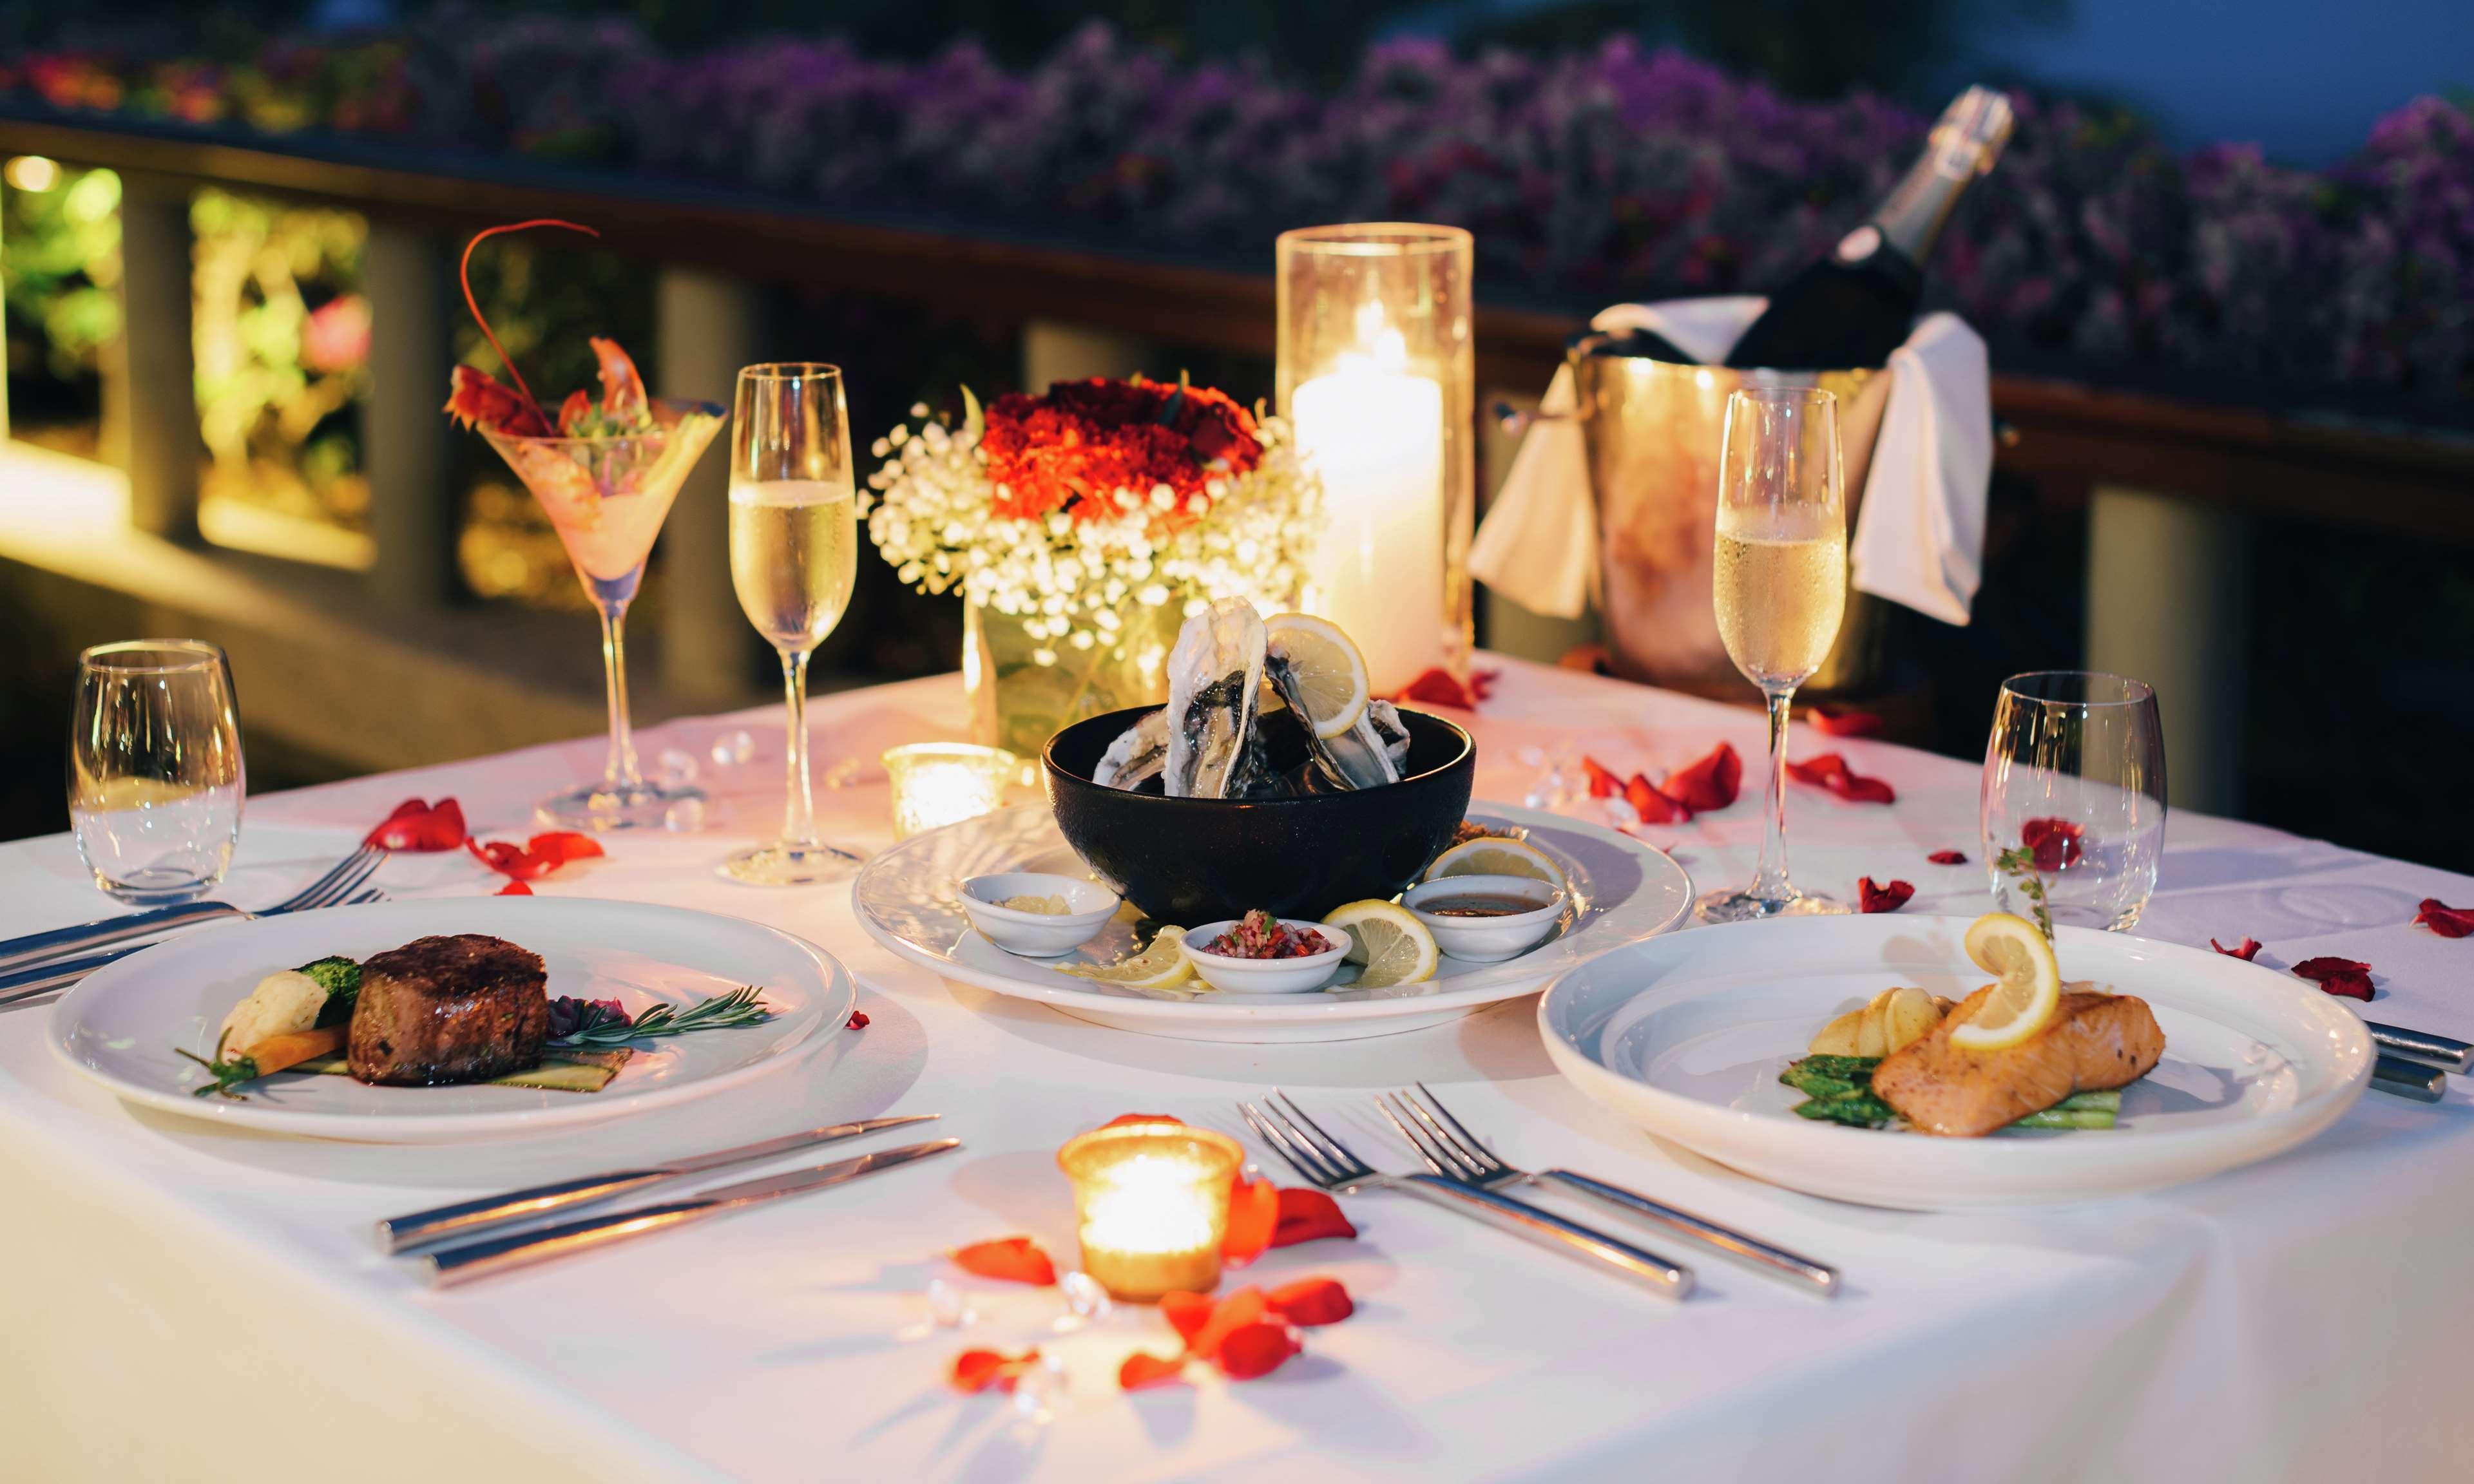 Ужин стол 3. Романтический ужин. Романтический стол. Романтический ужин на двоих. Столик для романтического ужина.